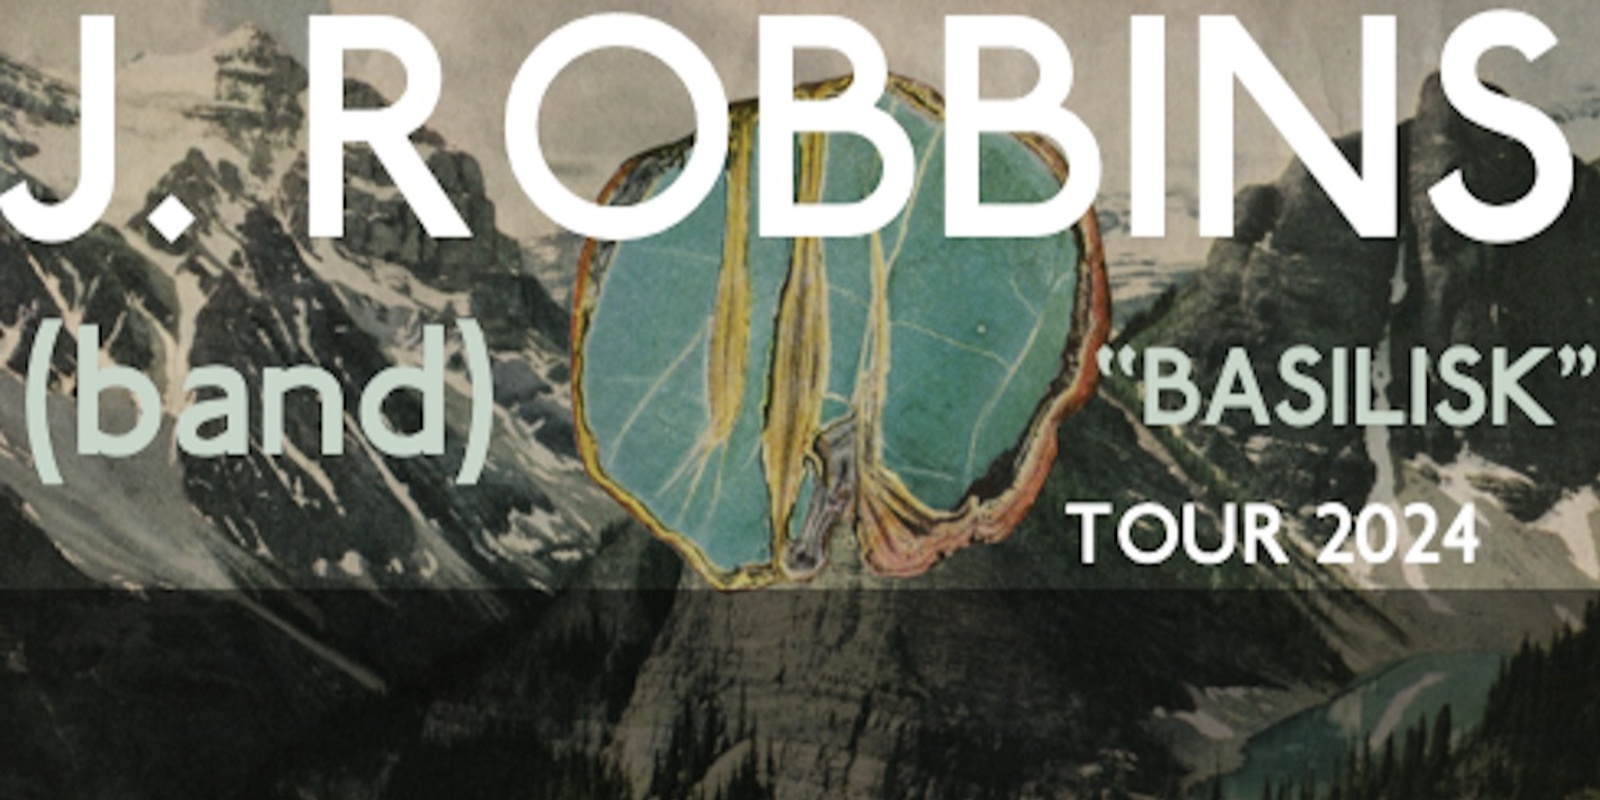 Banner image for J. Robbins (band) + tba